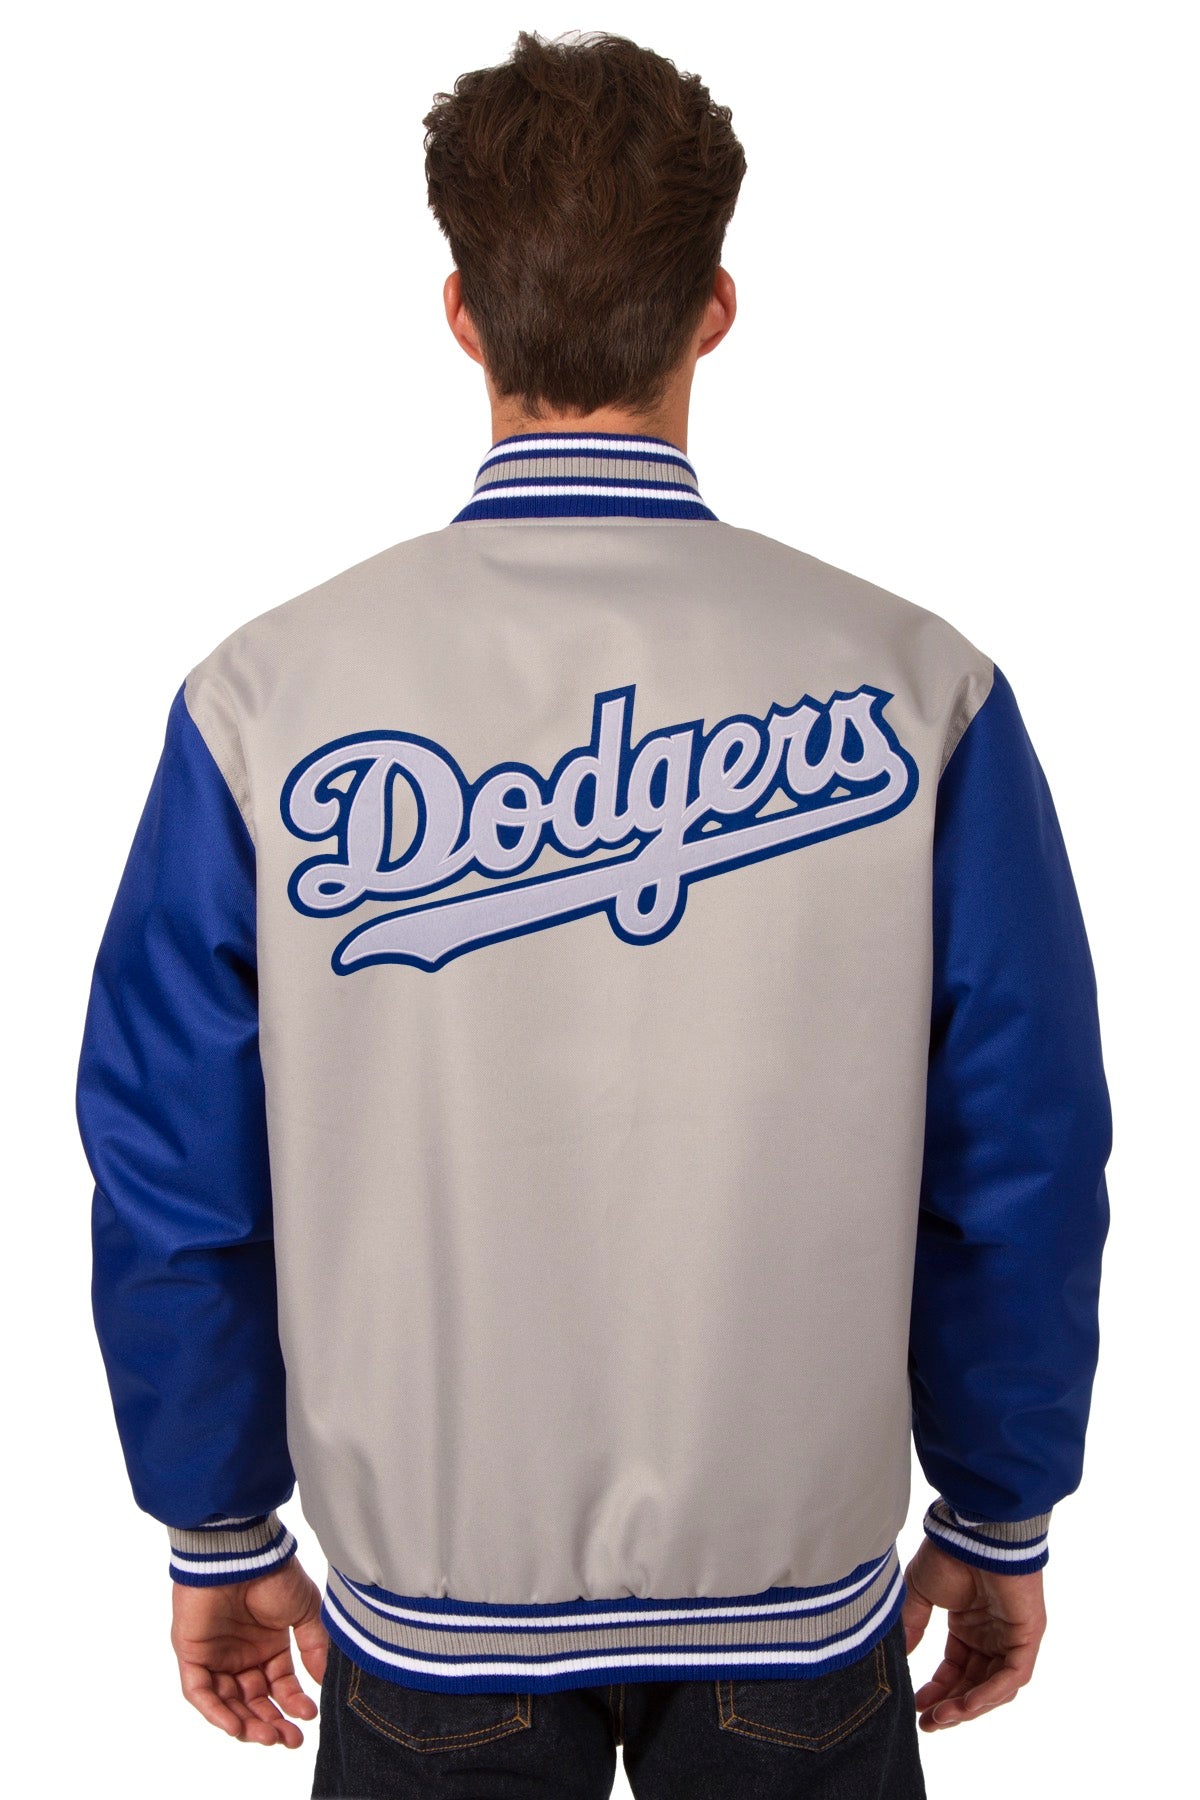 dodgers baseball jacket